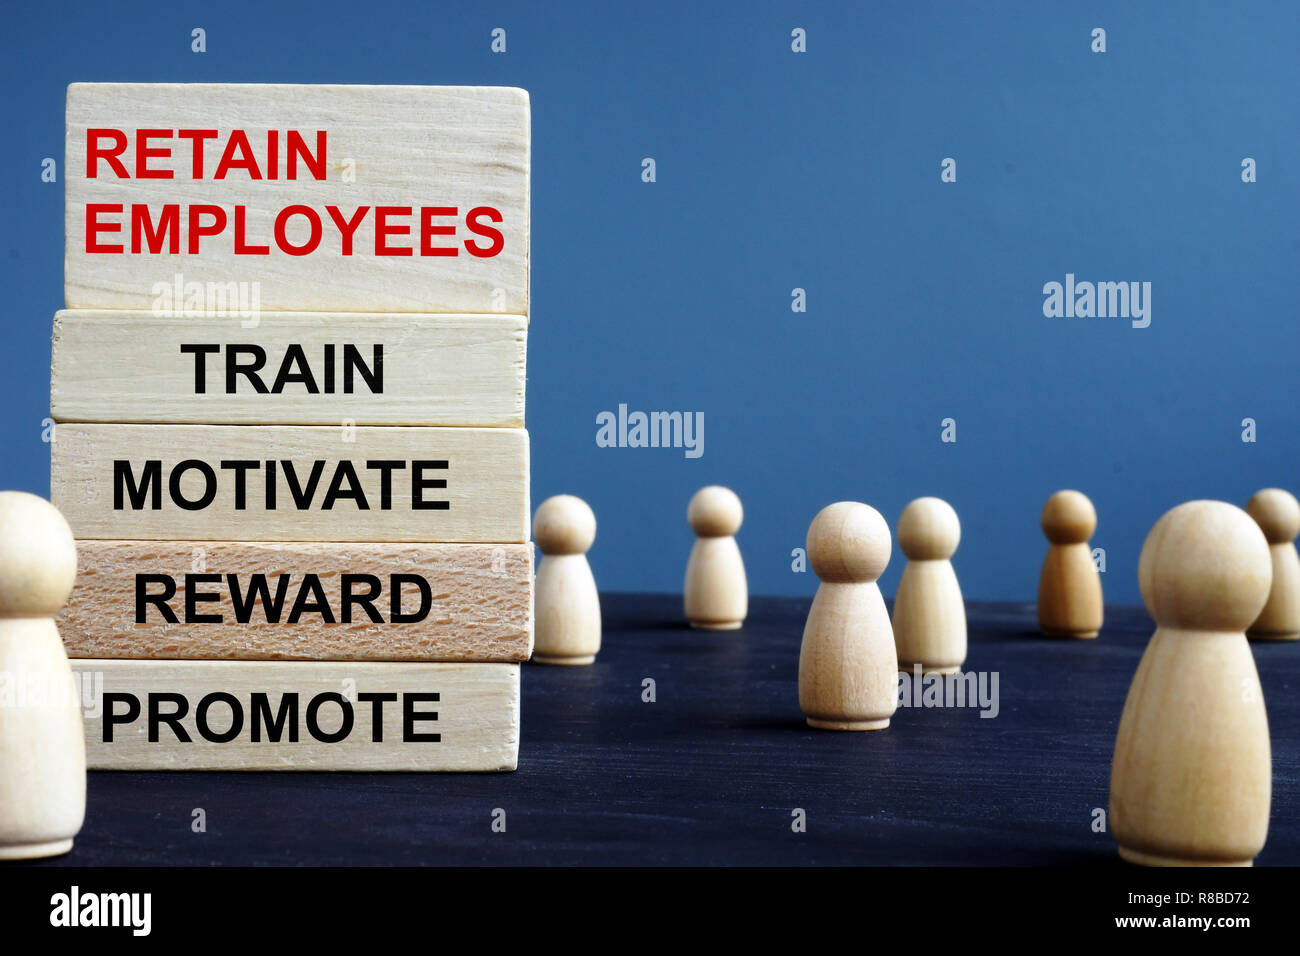 Words Retain Employees Train Motivate Reward Promote on a wooden blocks. Stock Photo